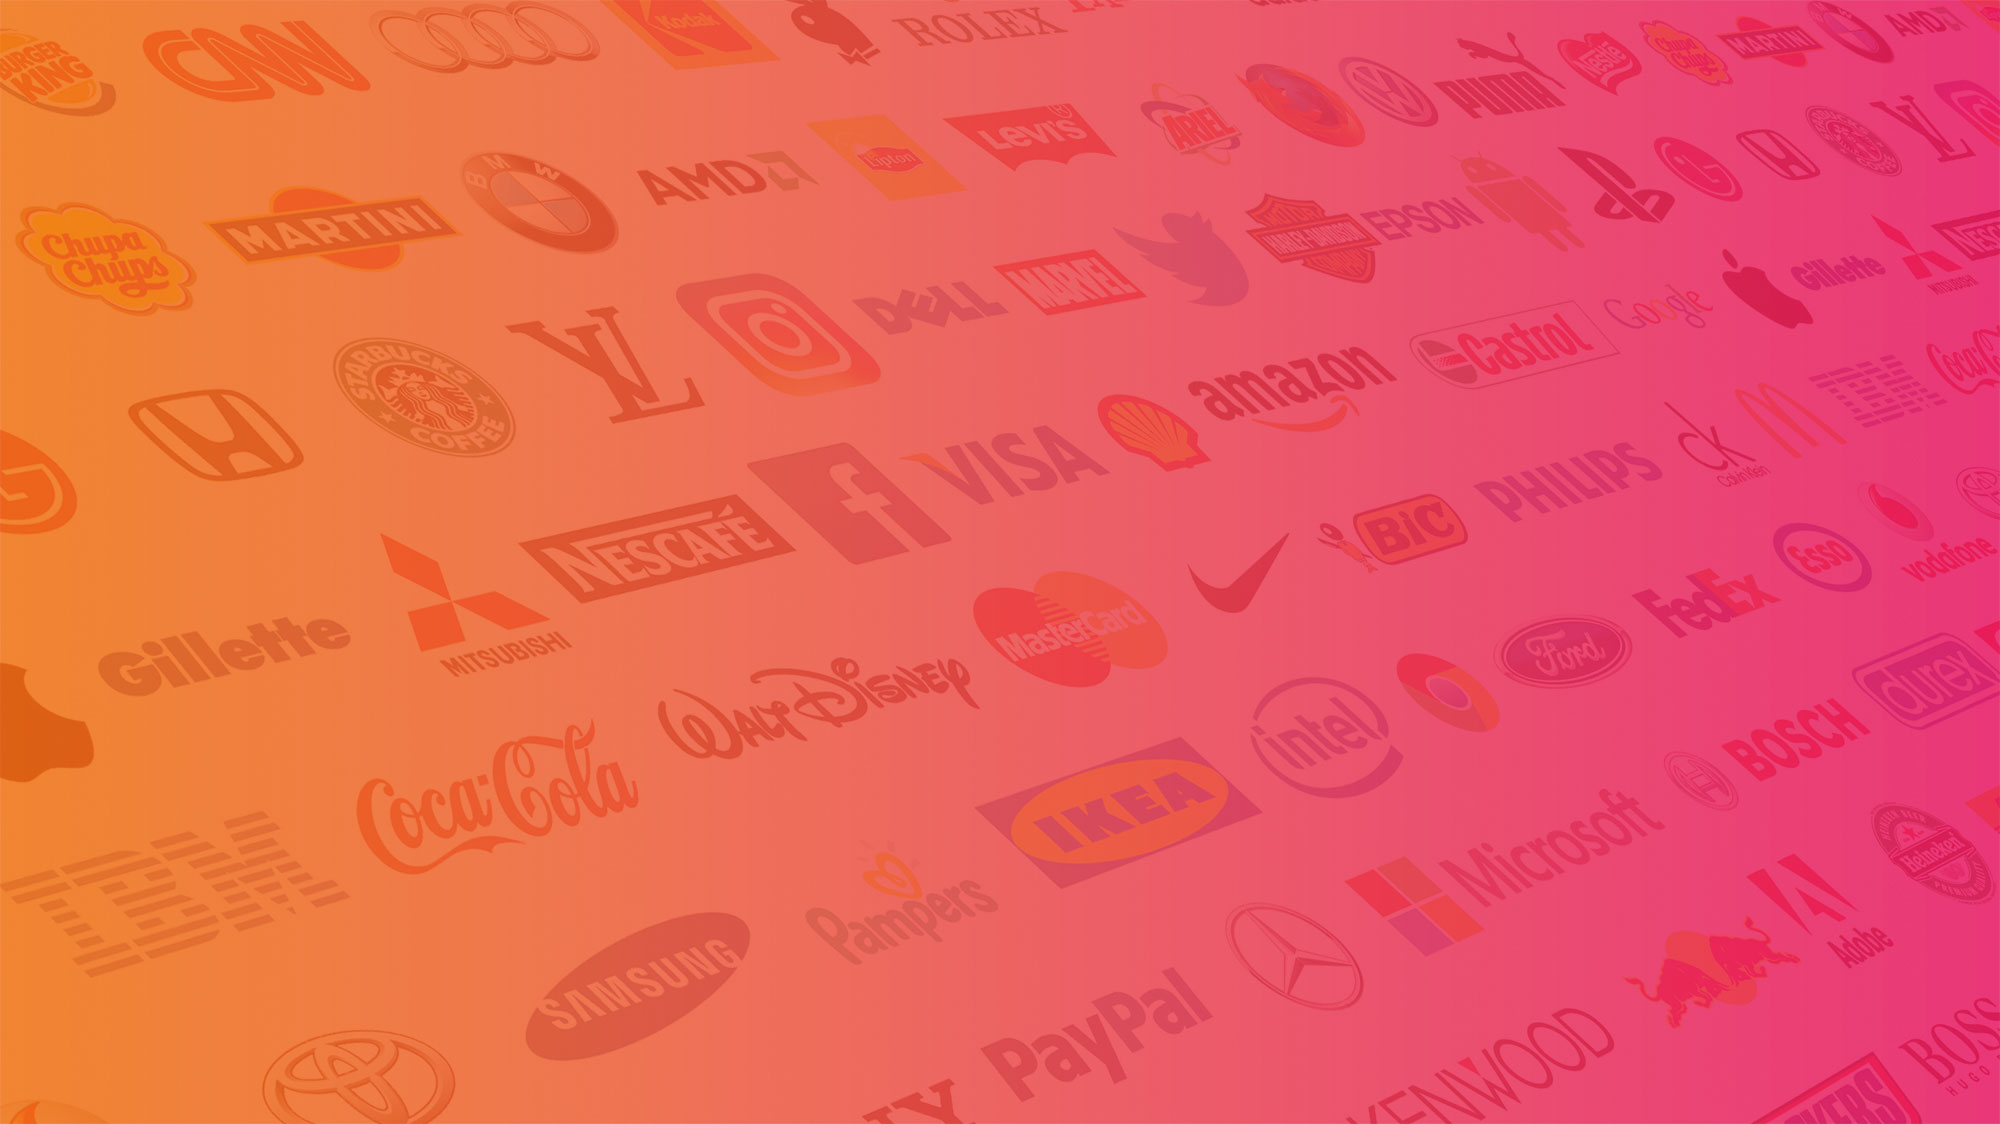 Media Robin - Premium Domains and Digital Branding